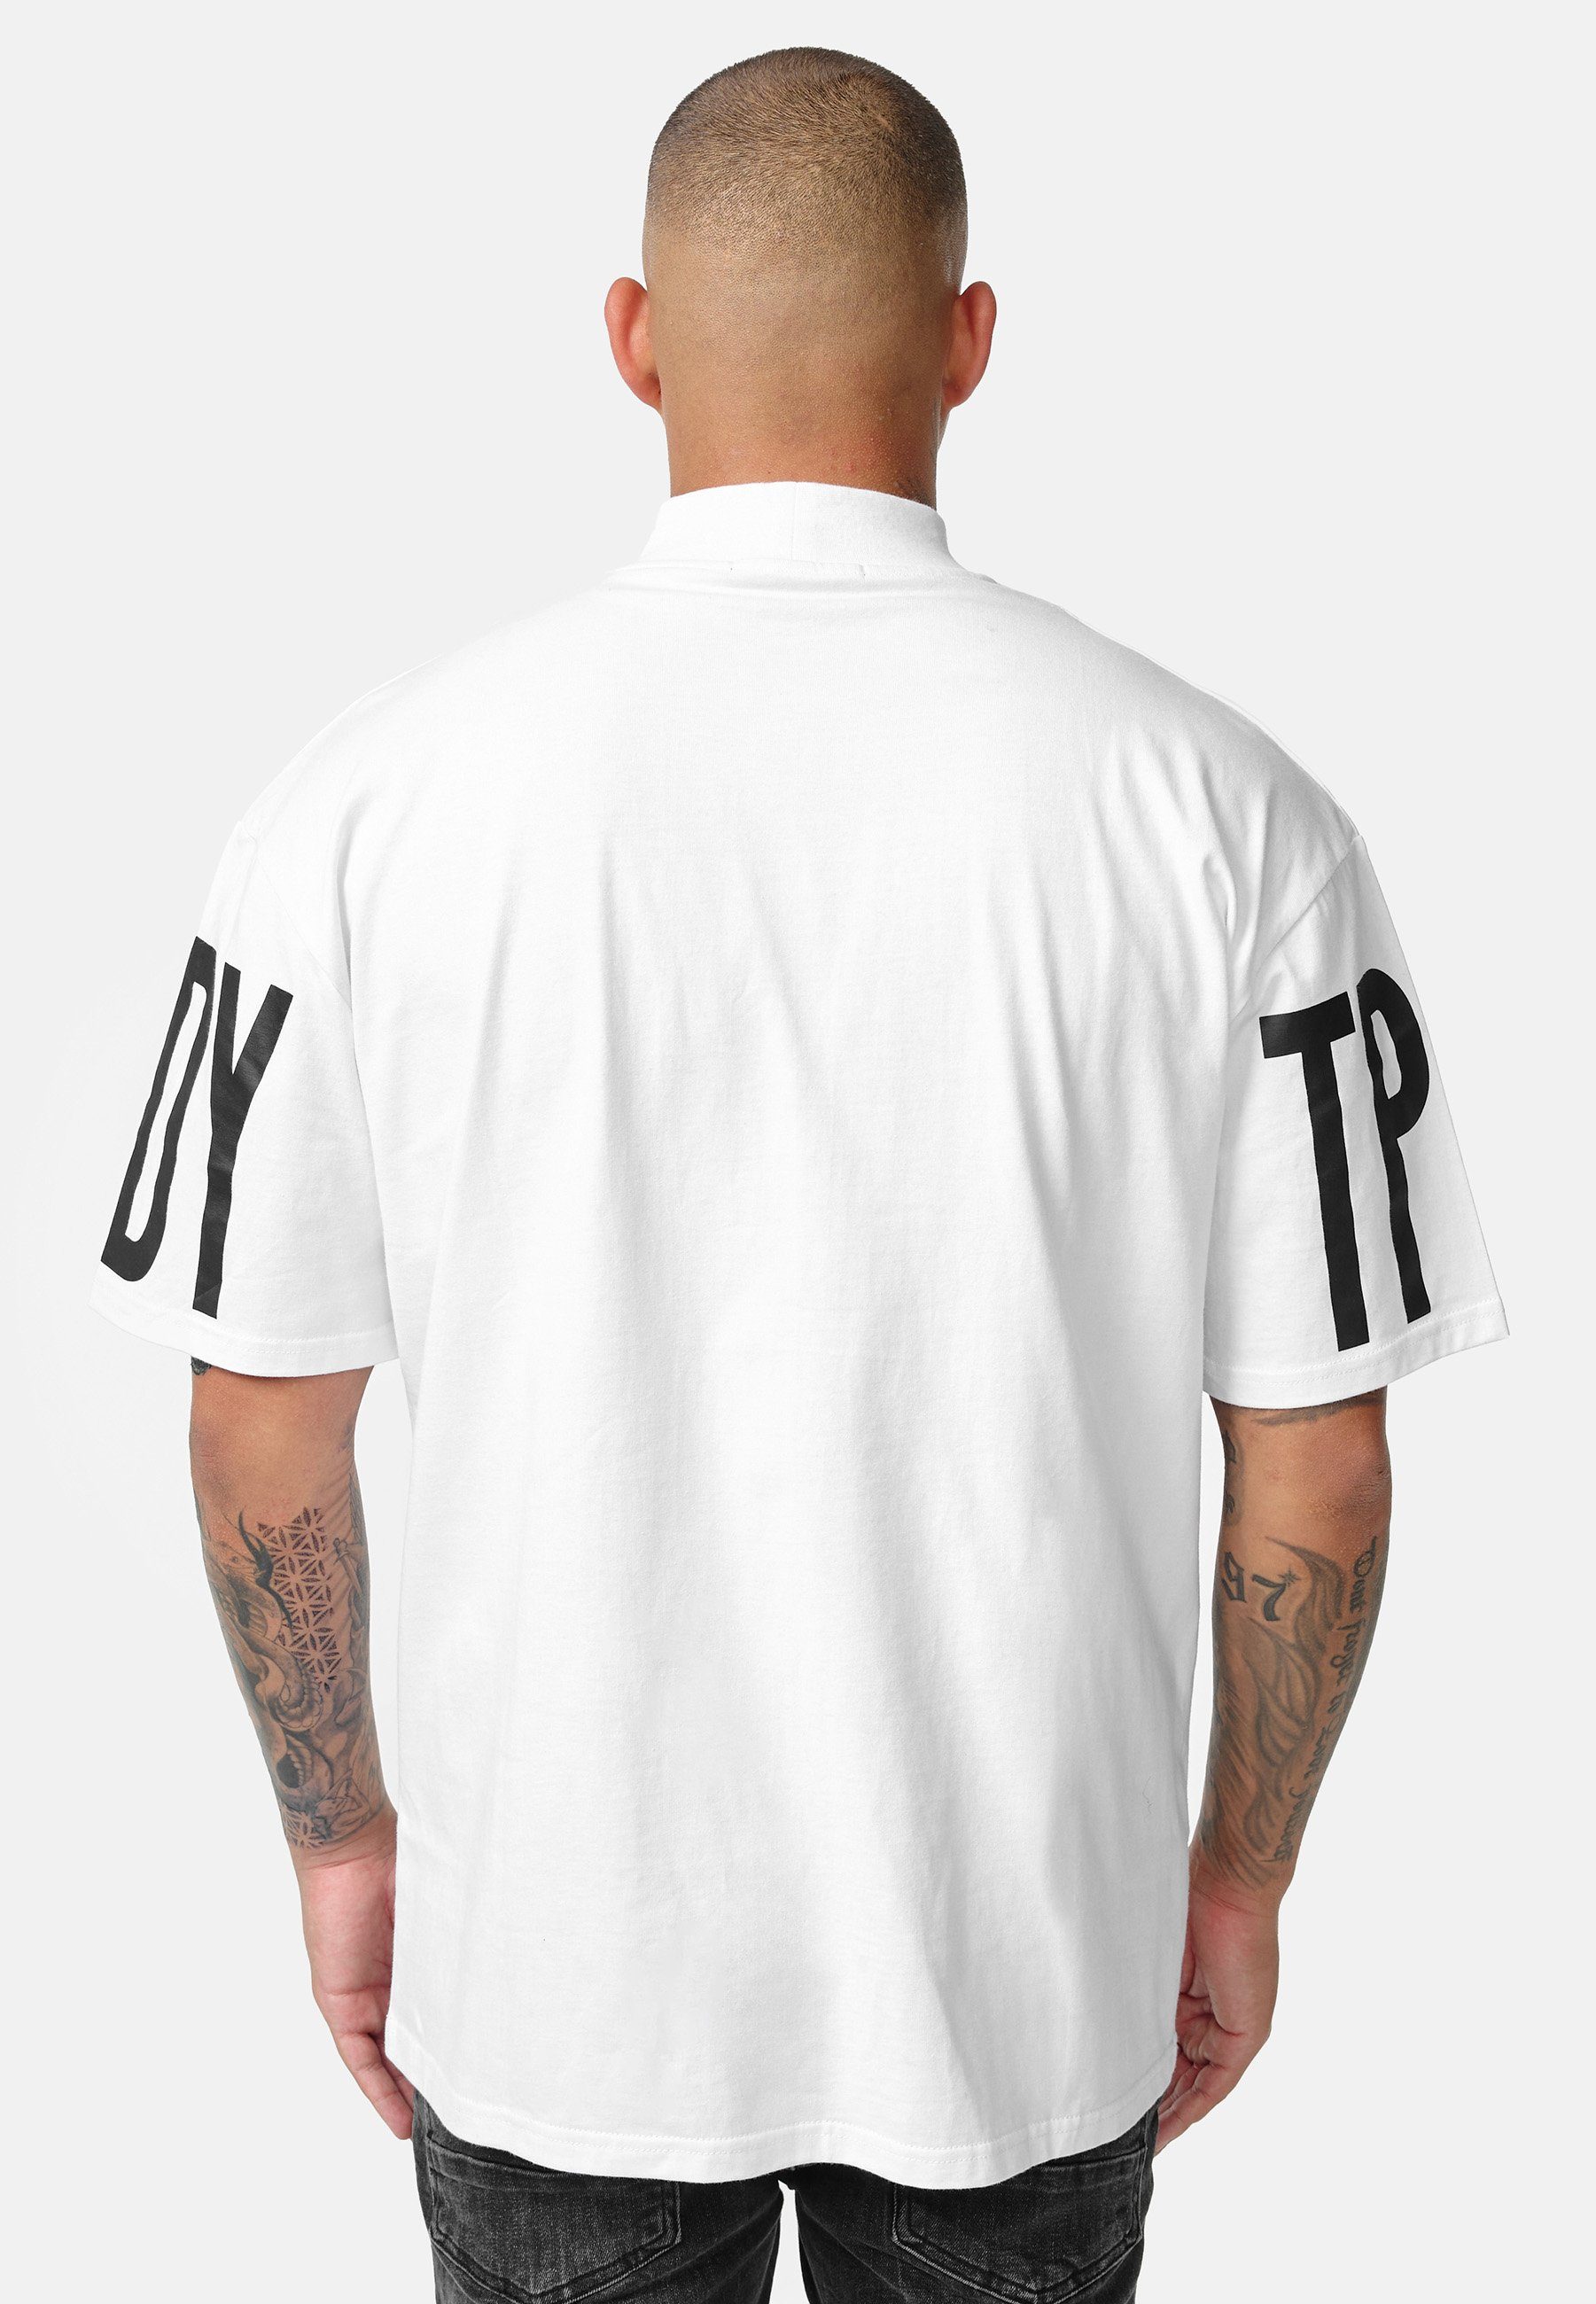 Stoff Oversize-Shirt Weiß Stehkragen Marlo dicker Logoprint trueprodigy